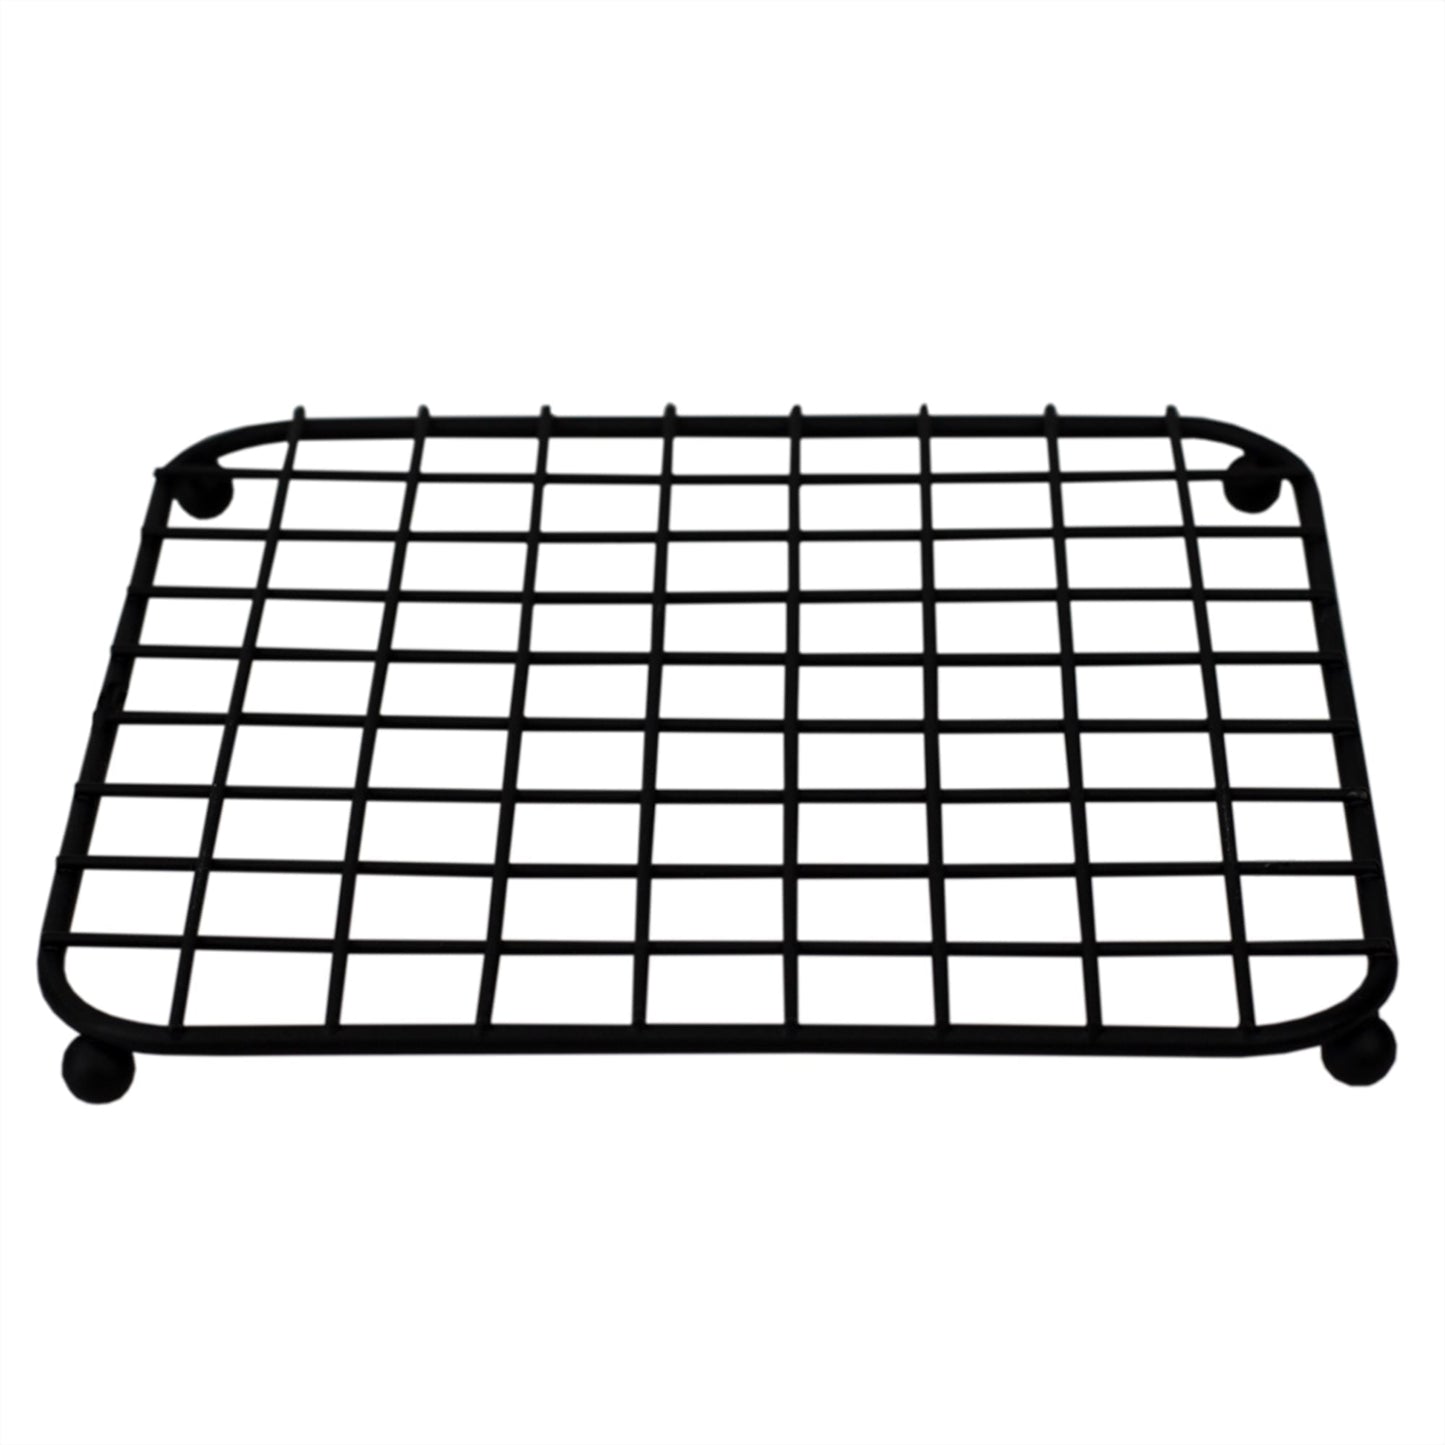 Grid Collection Non-Skid Square Trivet, Black